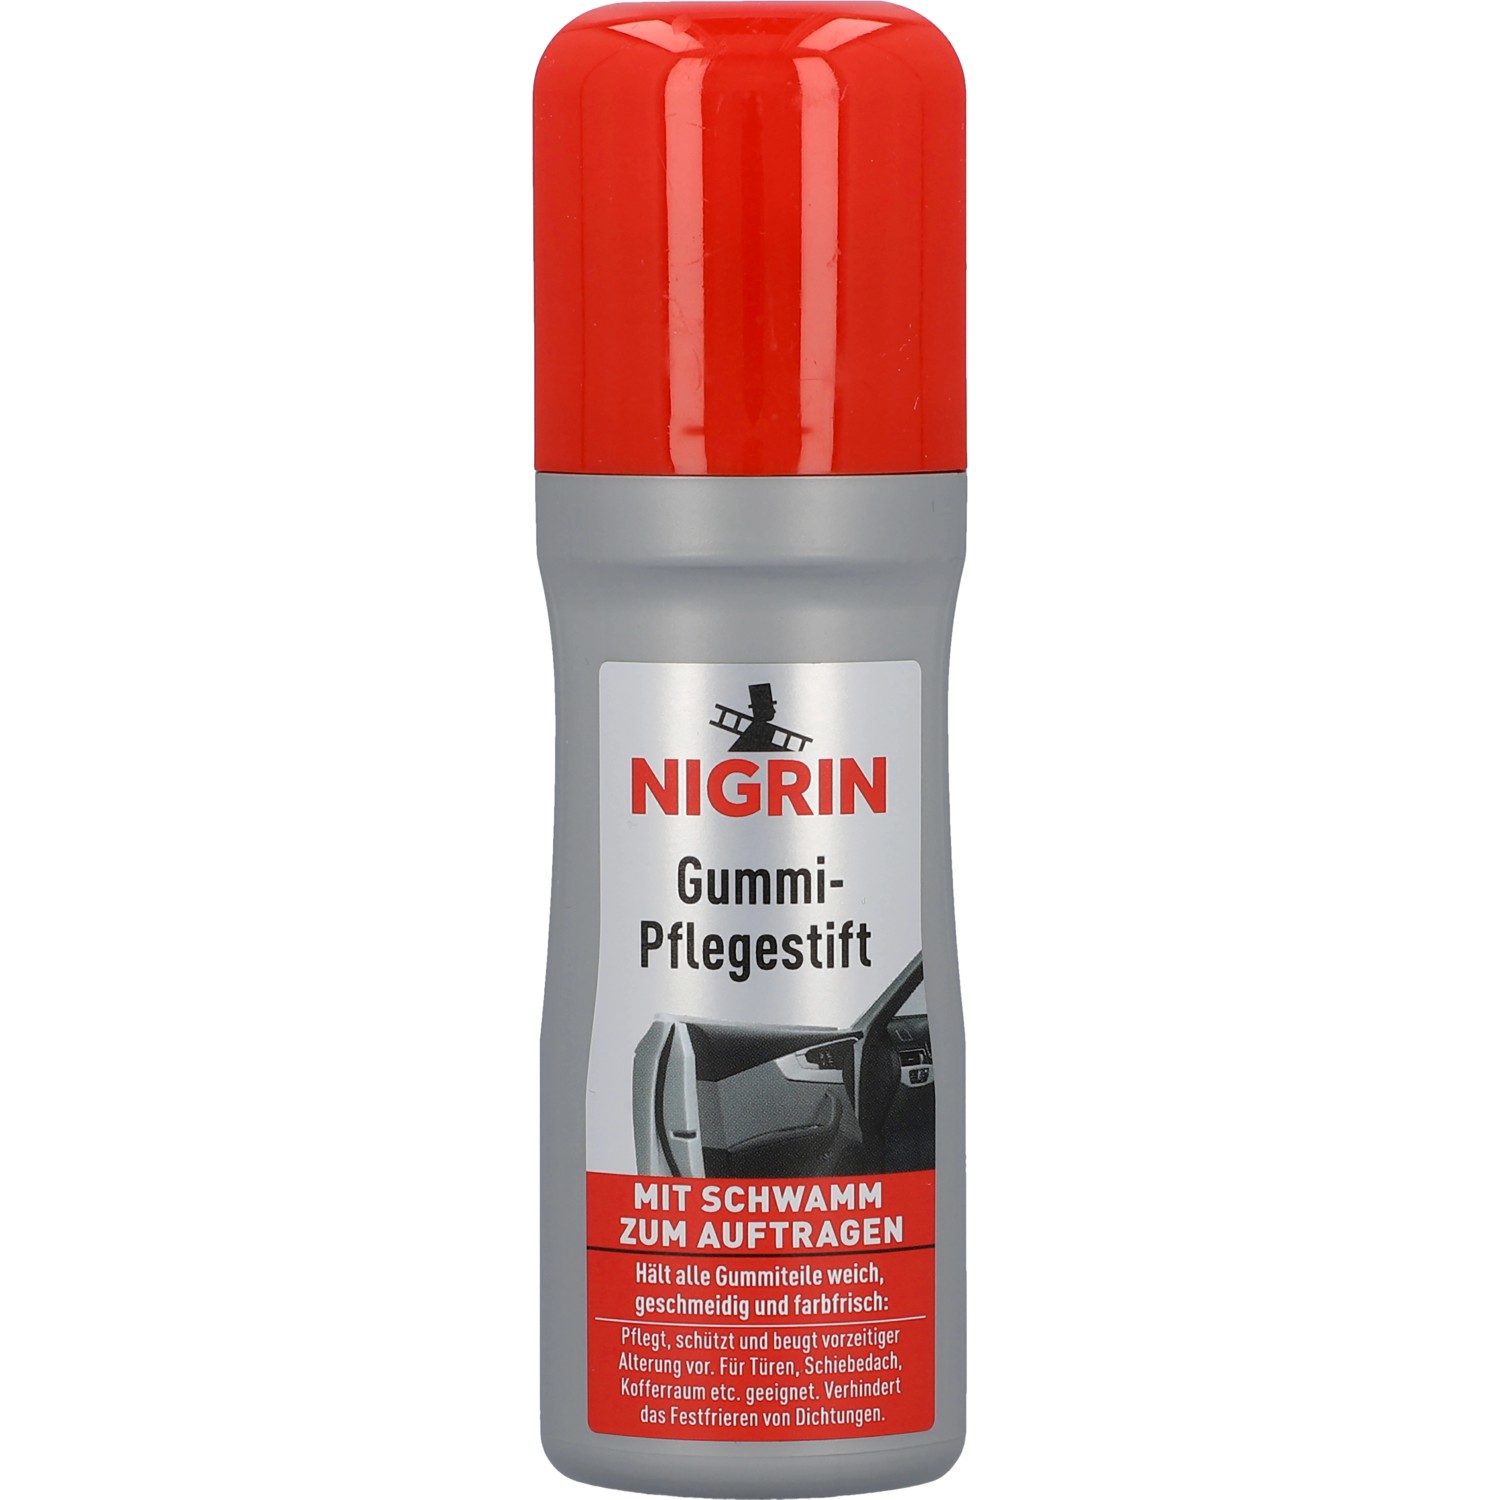 Nigrin Gummi-Pflegestift 75 ml